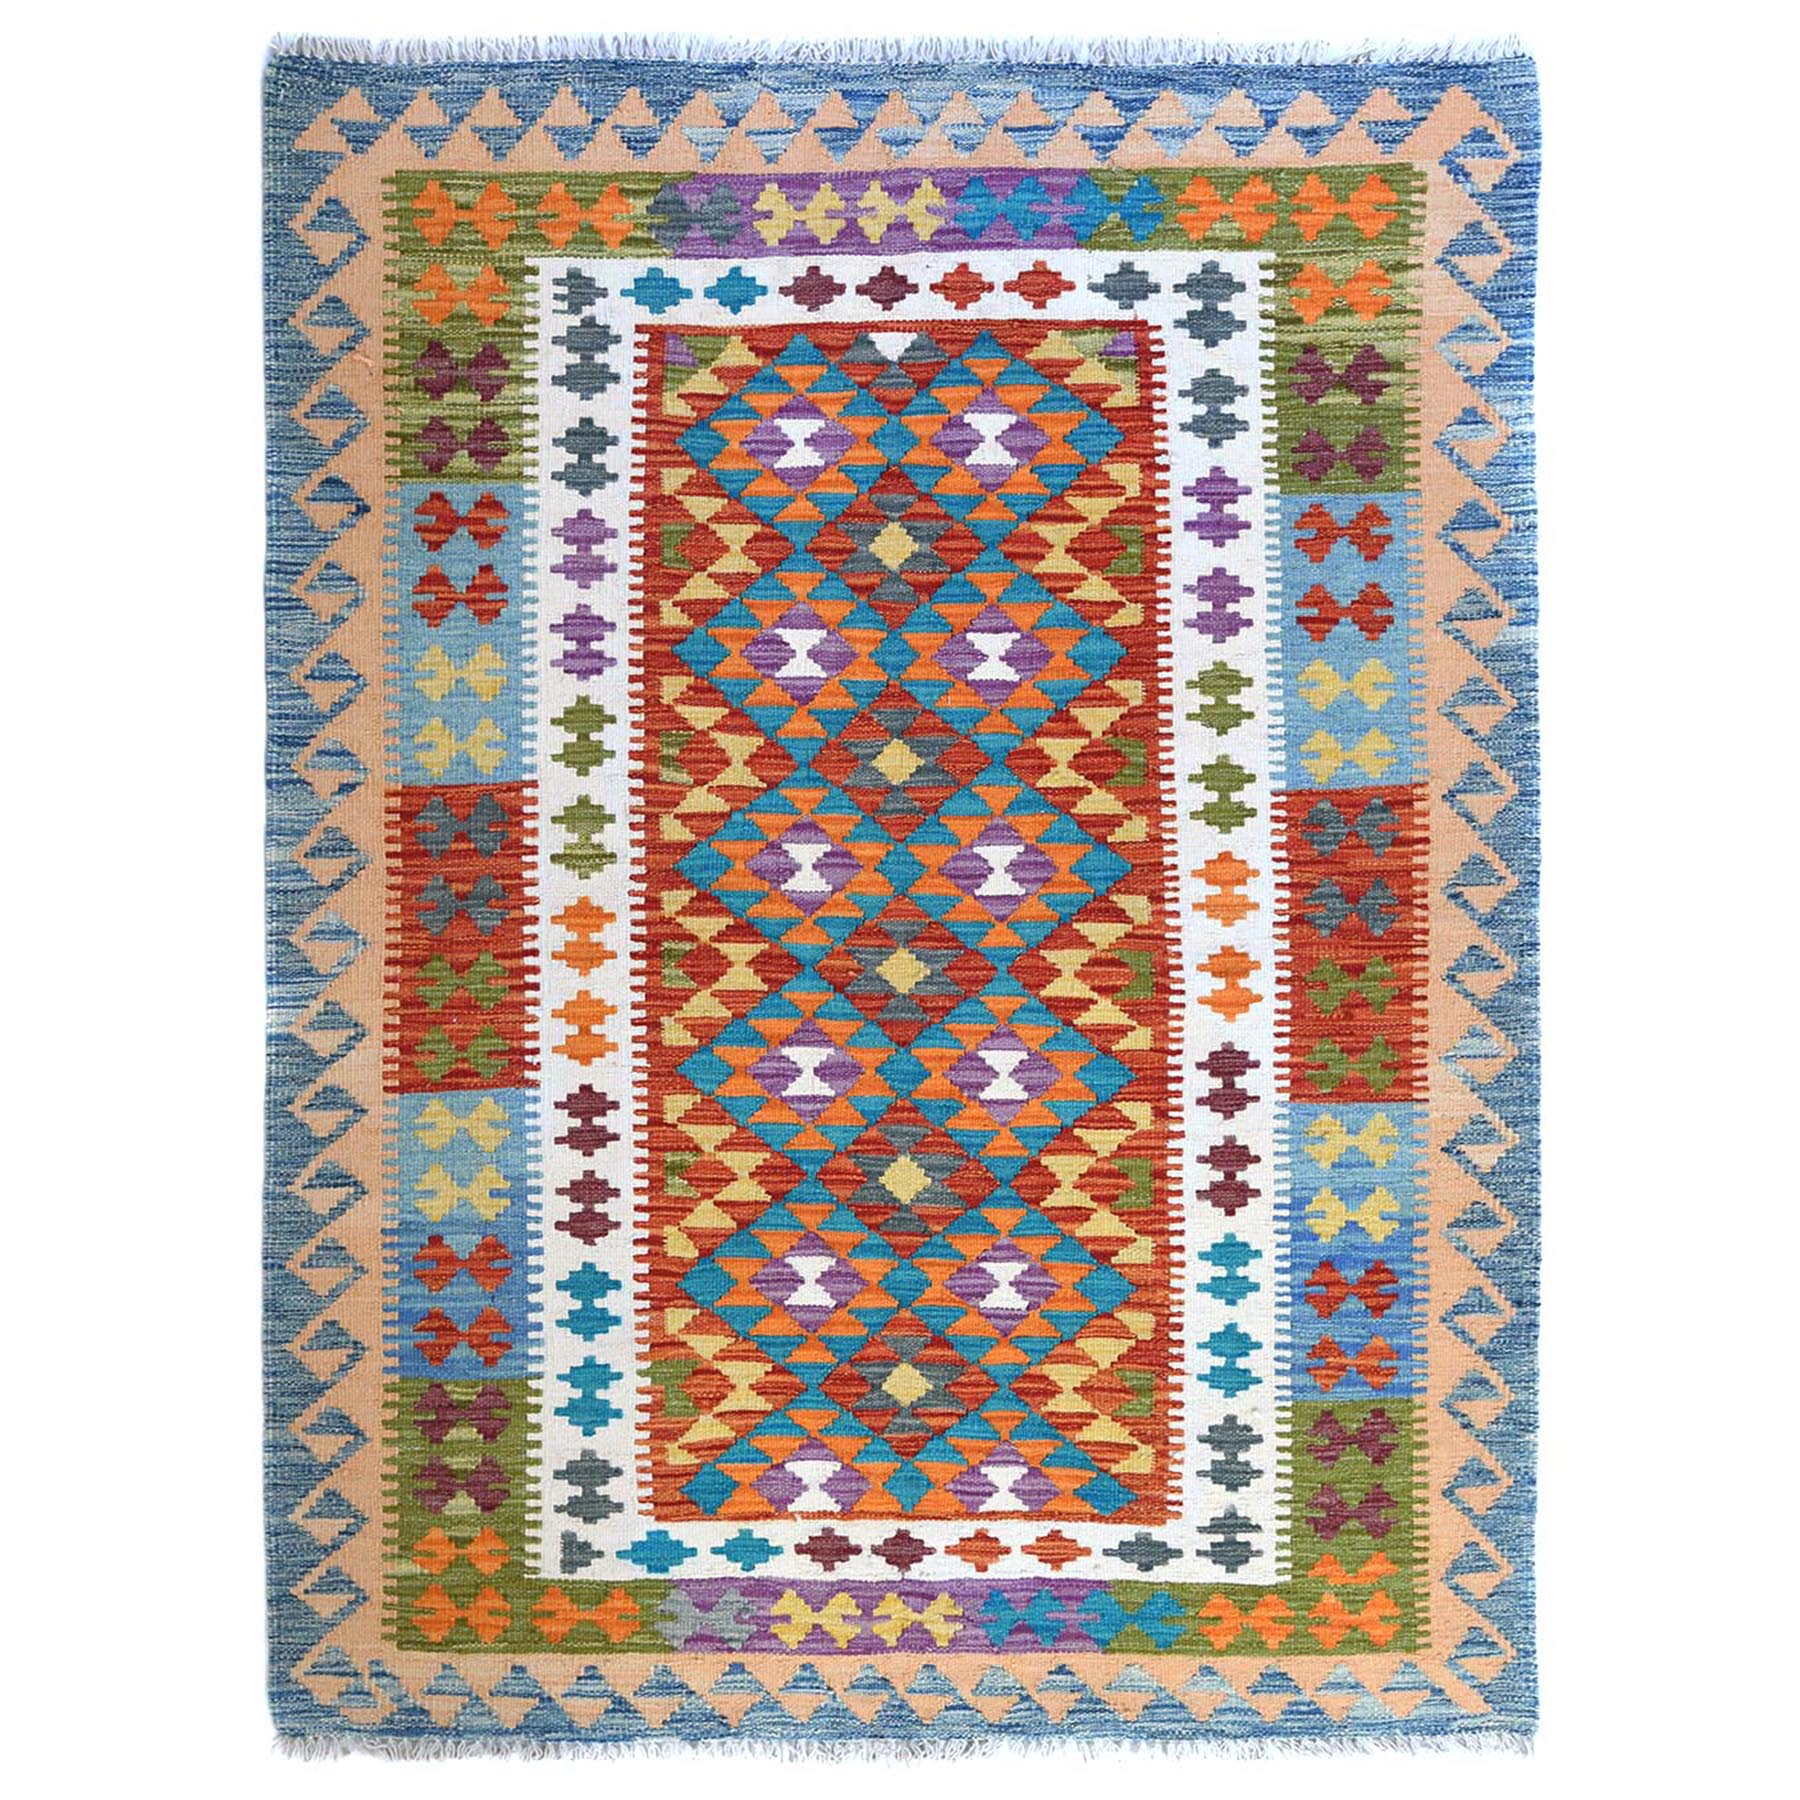 FLAT WEAVE Afghan Kilim Reversible Hand knotted Oriental Rugs